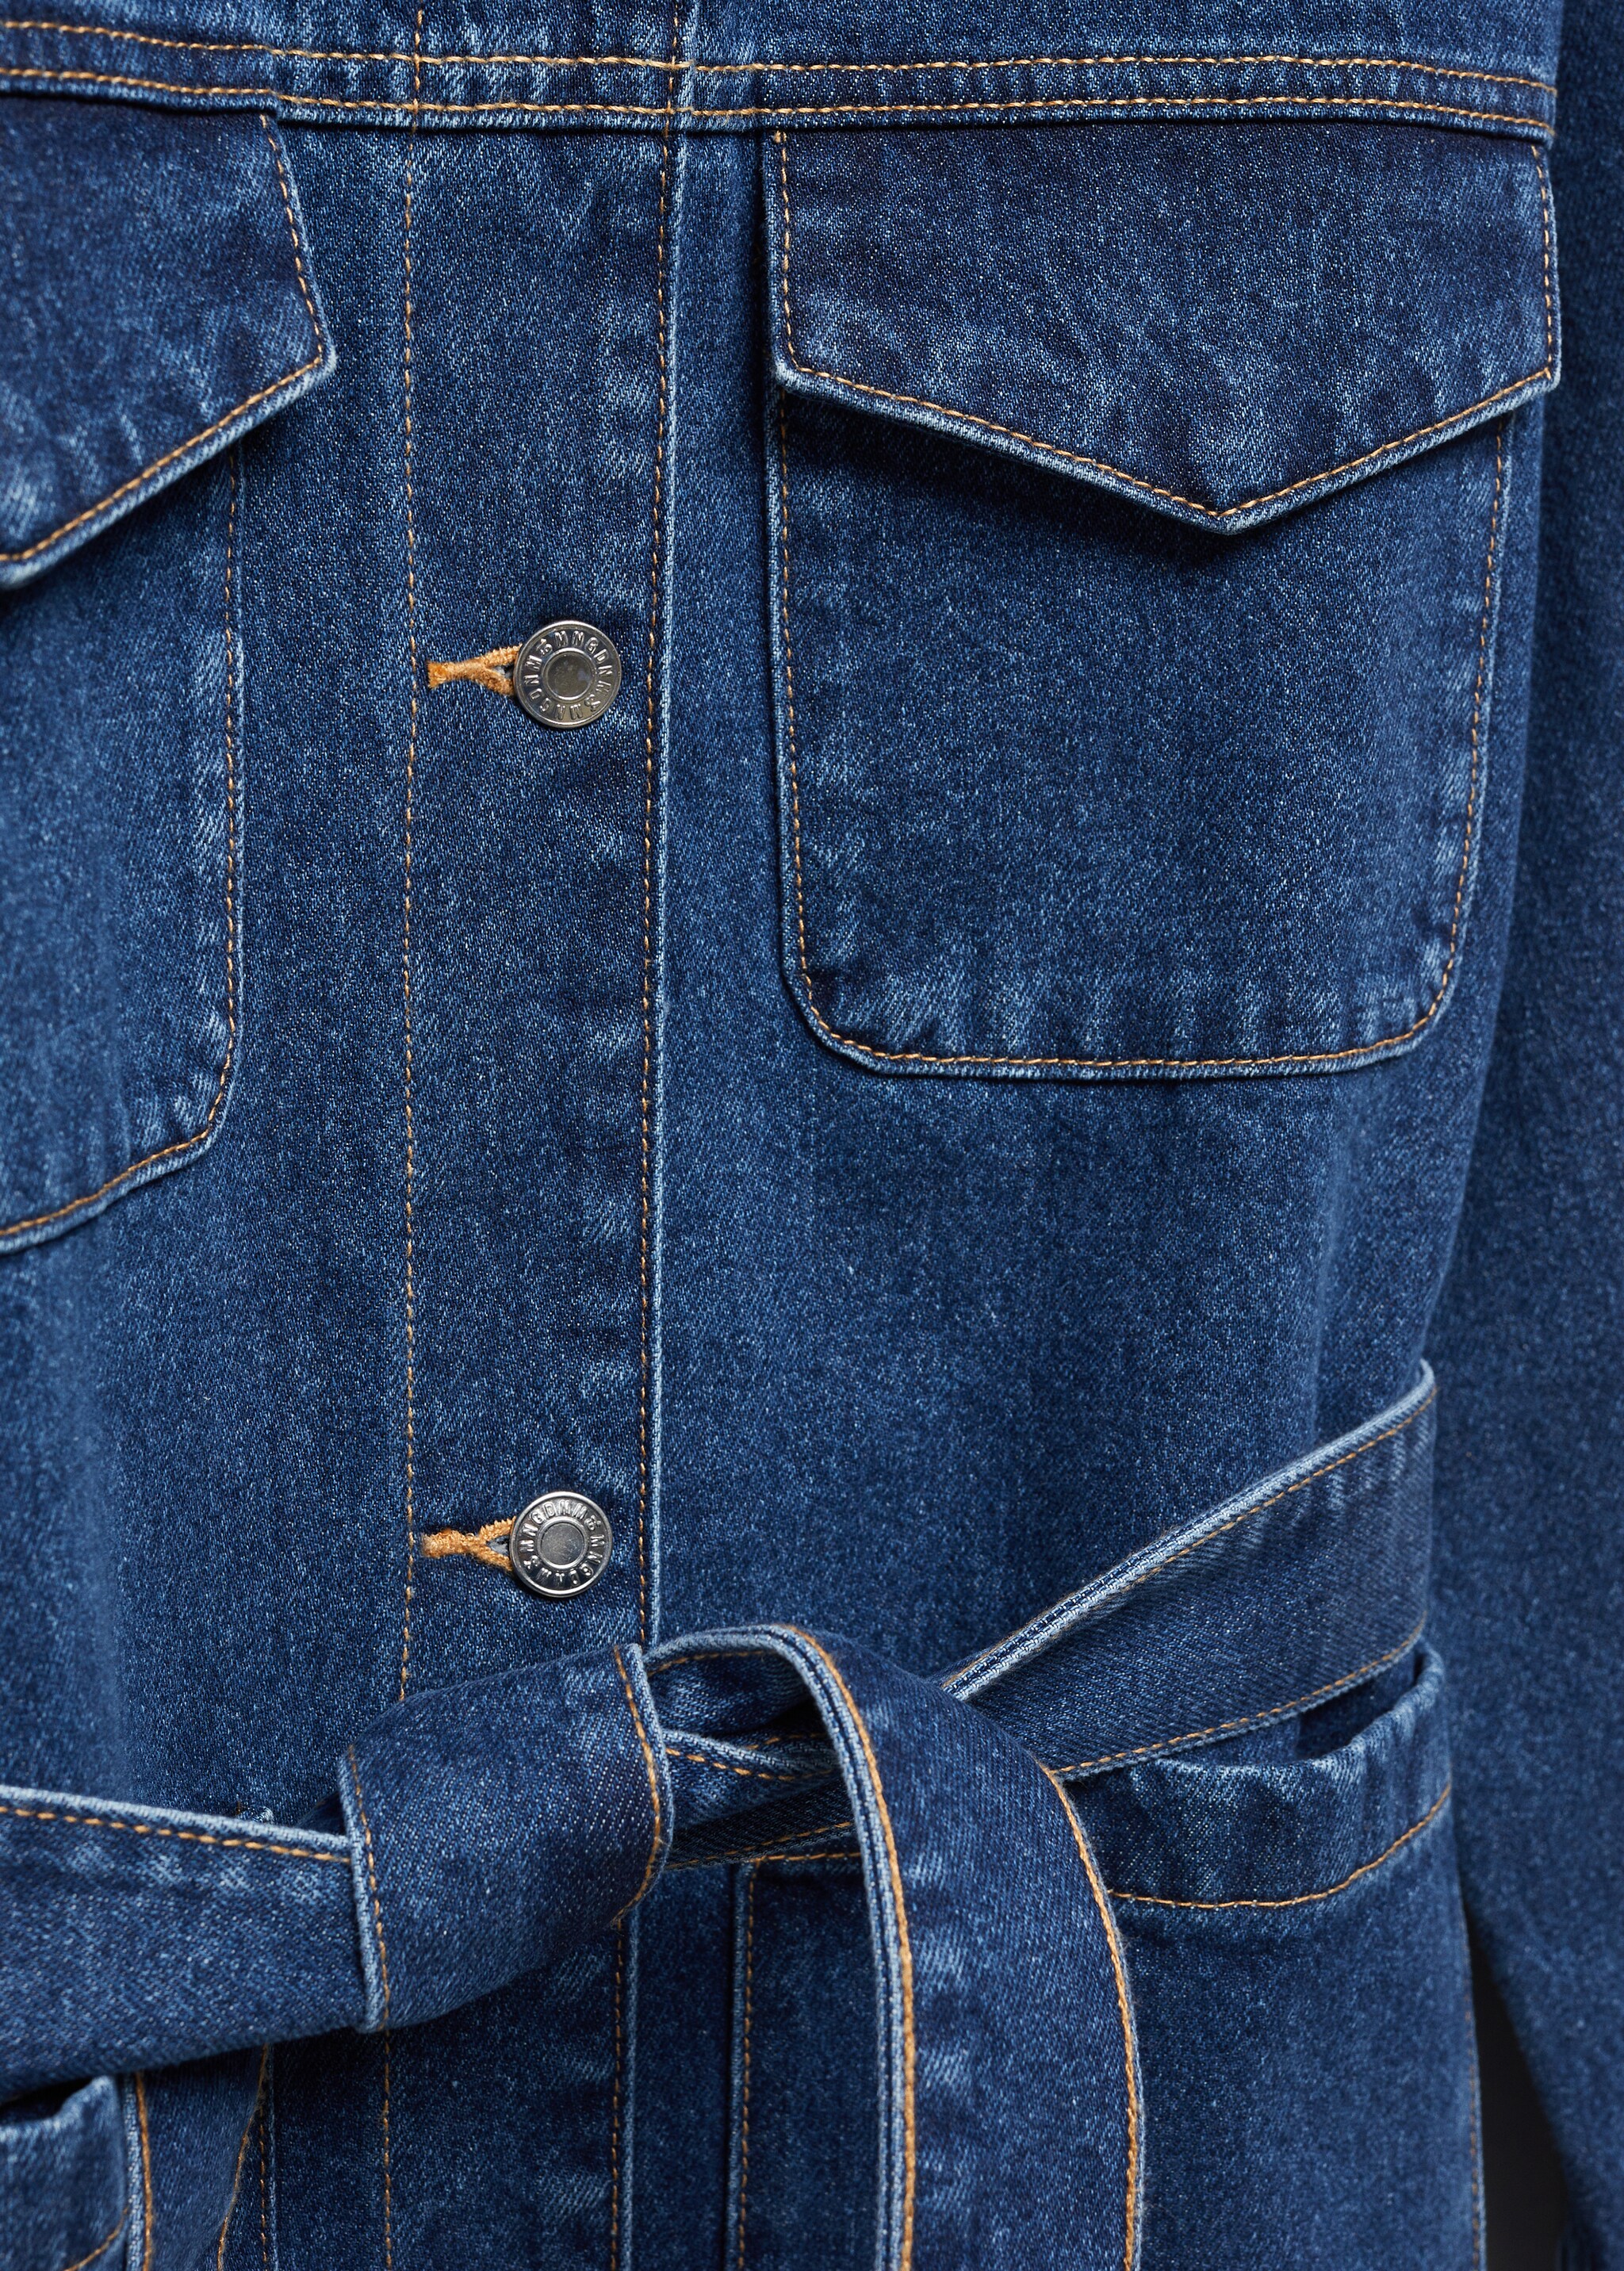 Denim jacket with belt - Details of the article 8